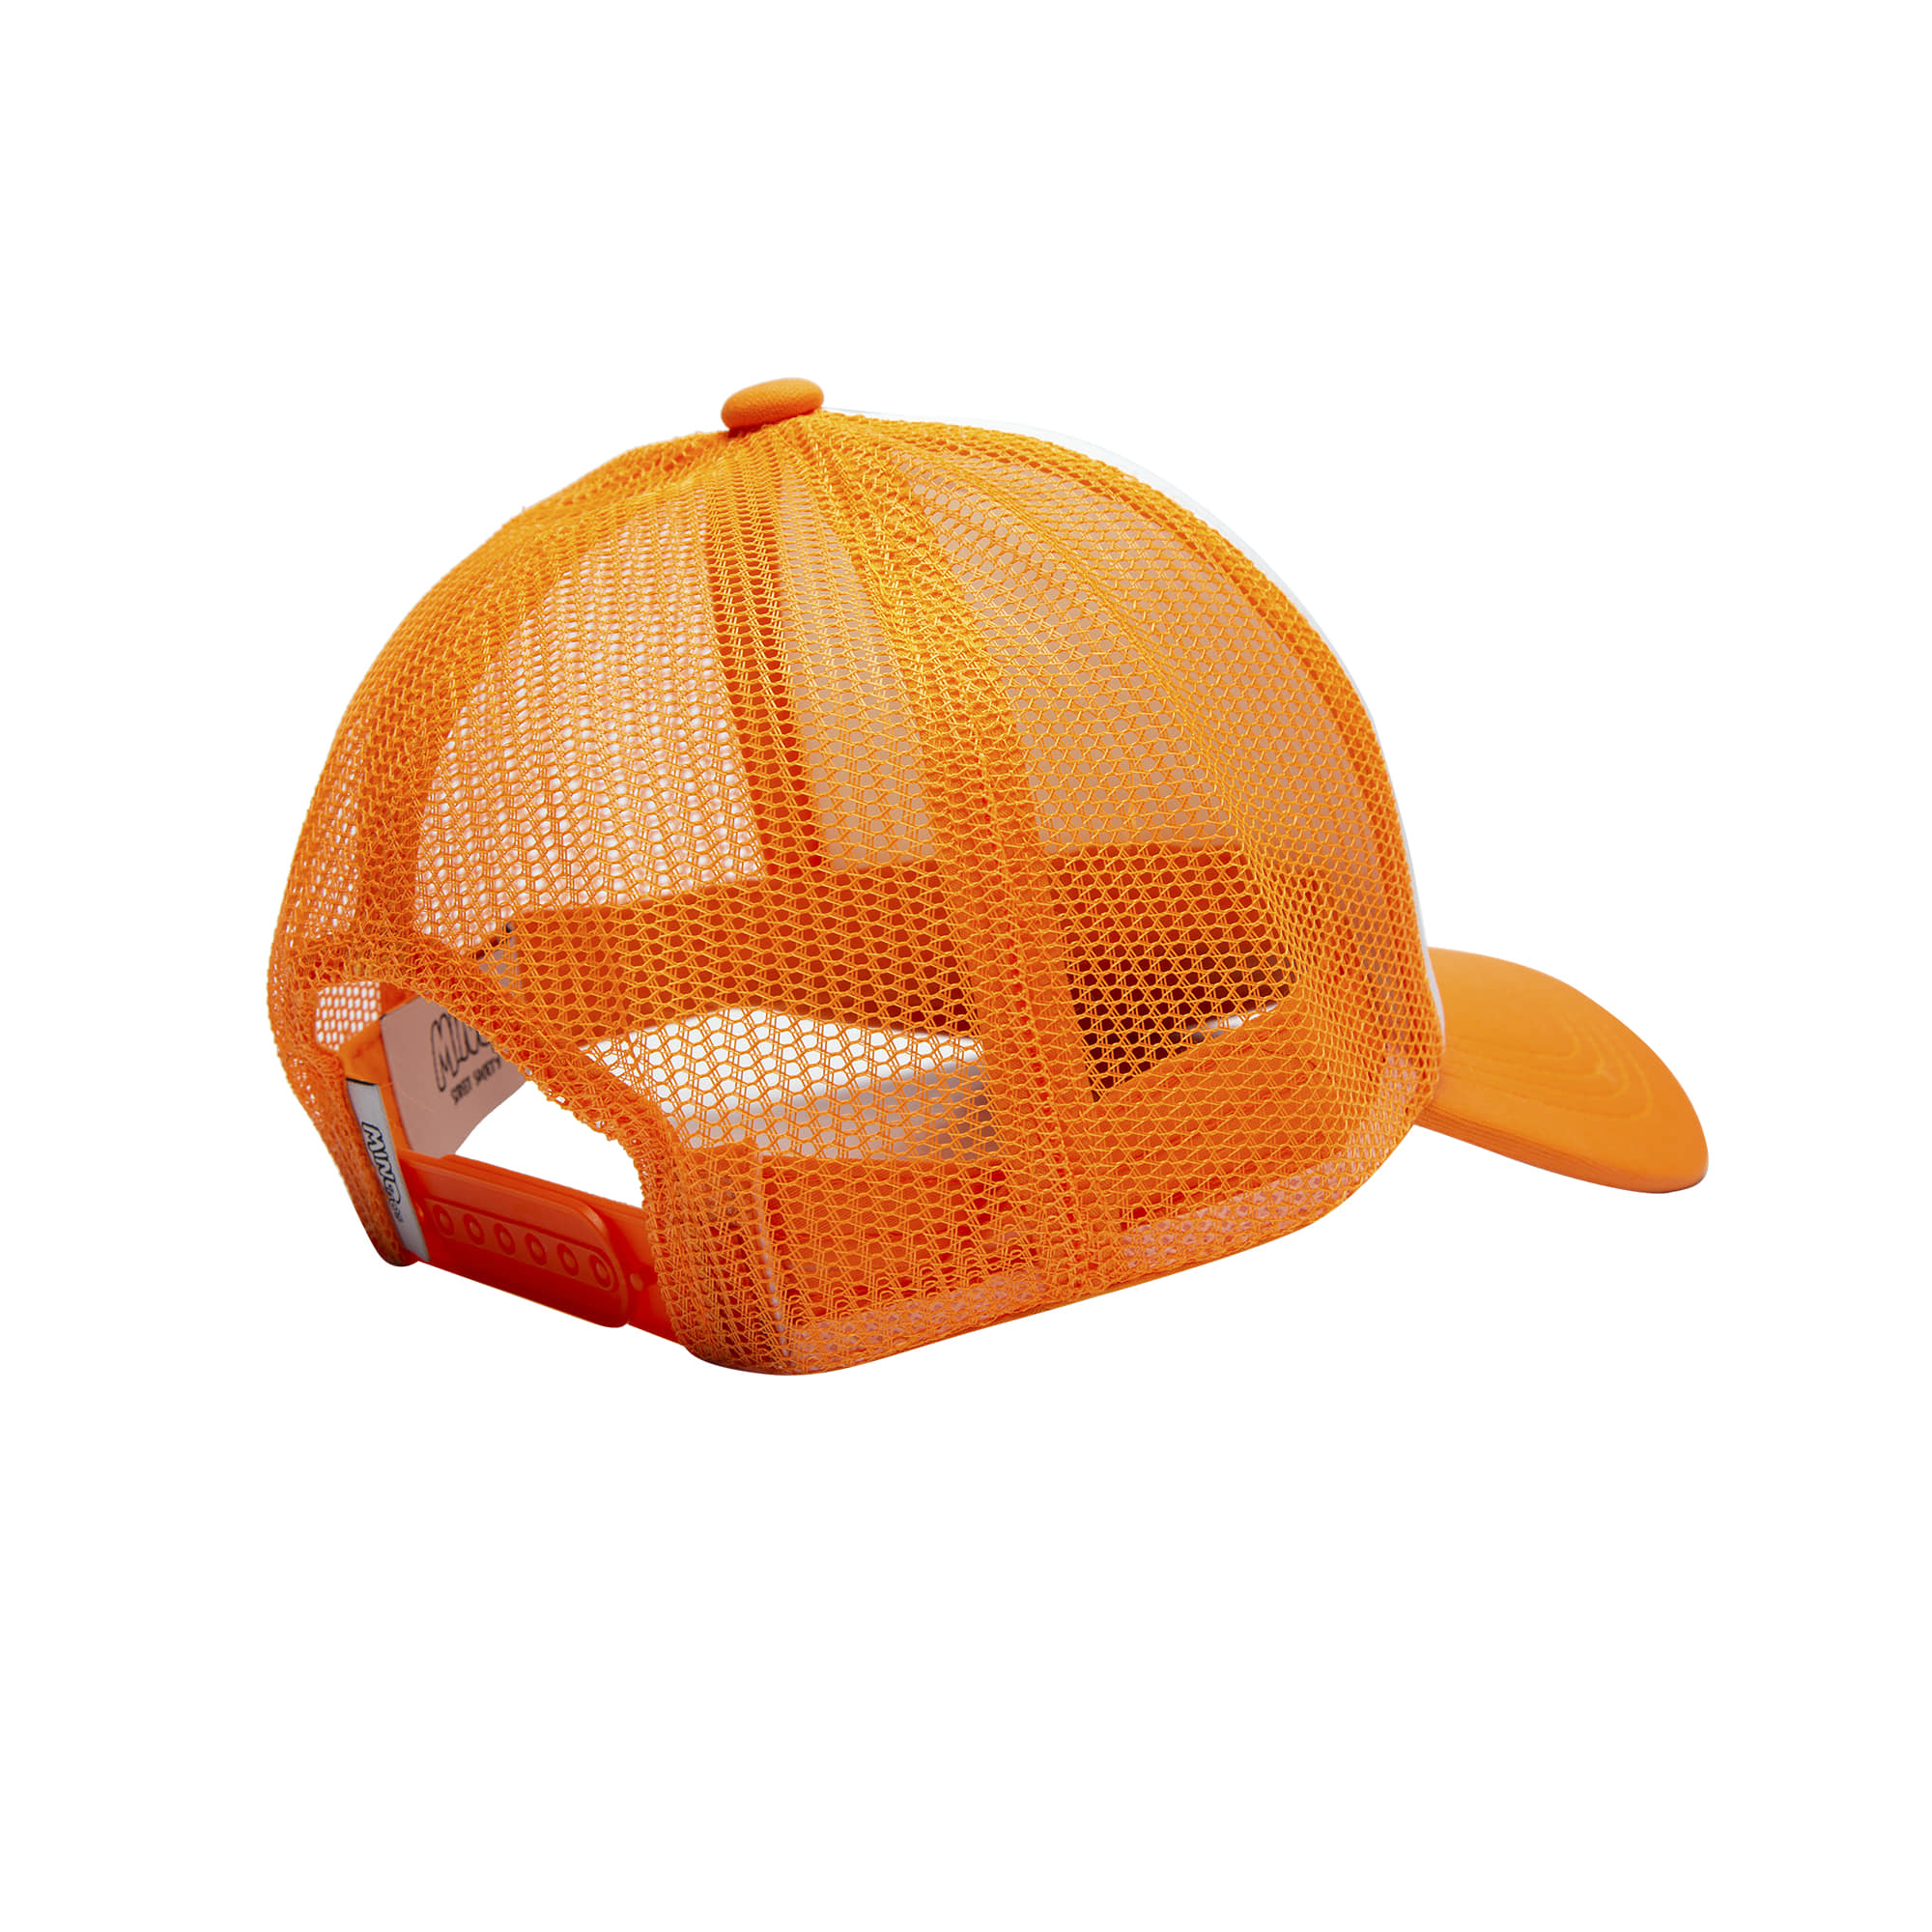 intelligence Mesh cap (Orange/ white)